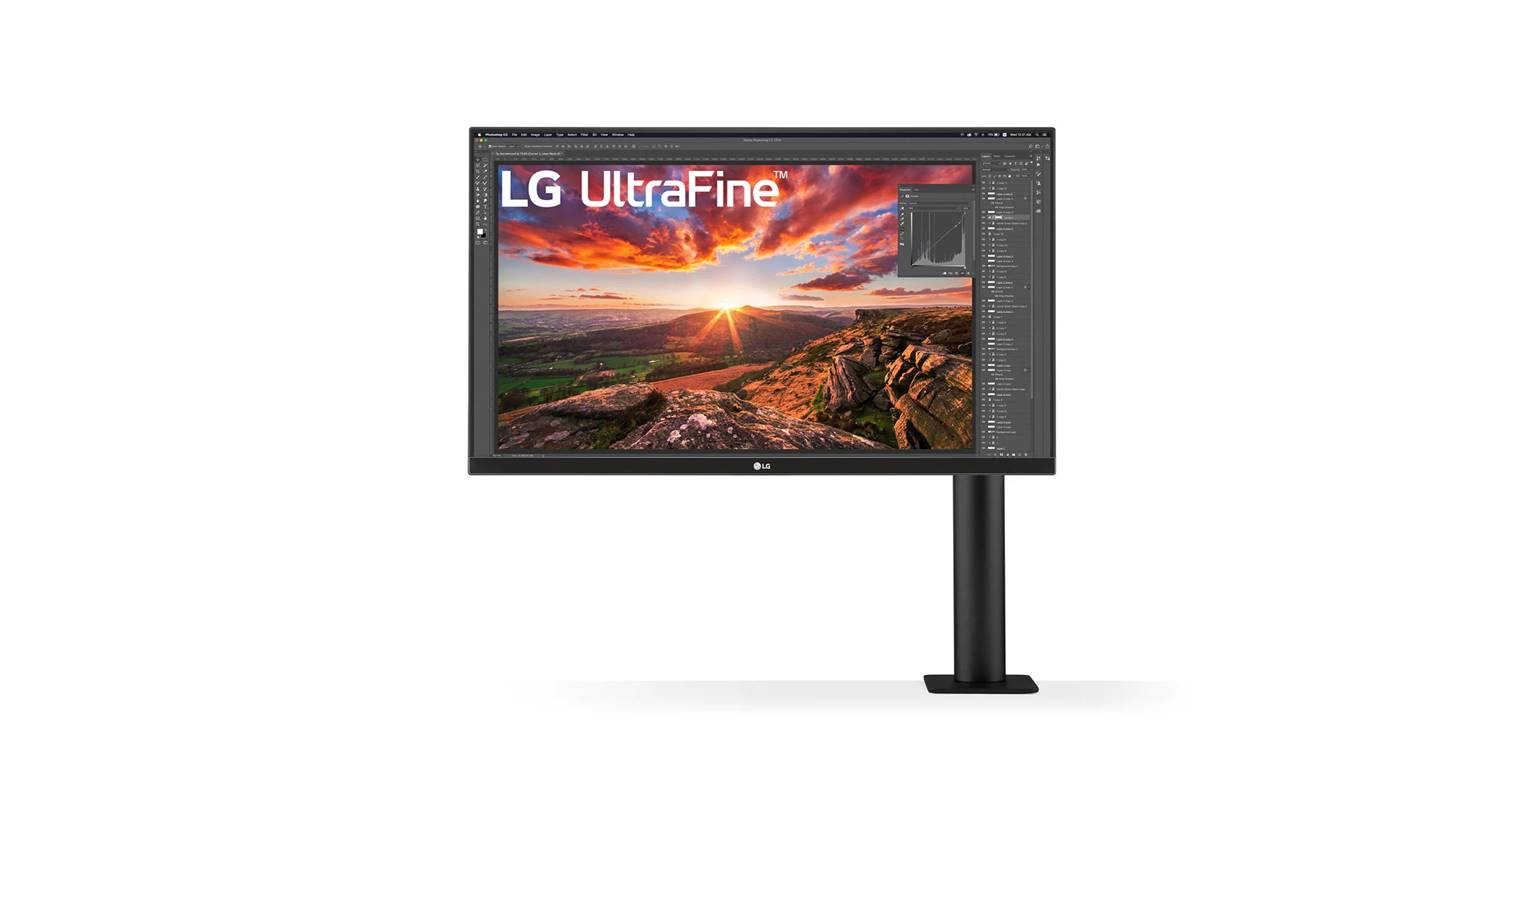 LG UltraFine 27-inch IPS Monitor (27UN880-B)|Harvey Norman